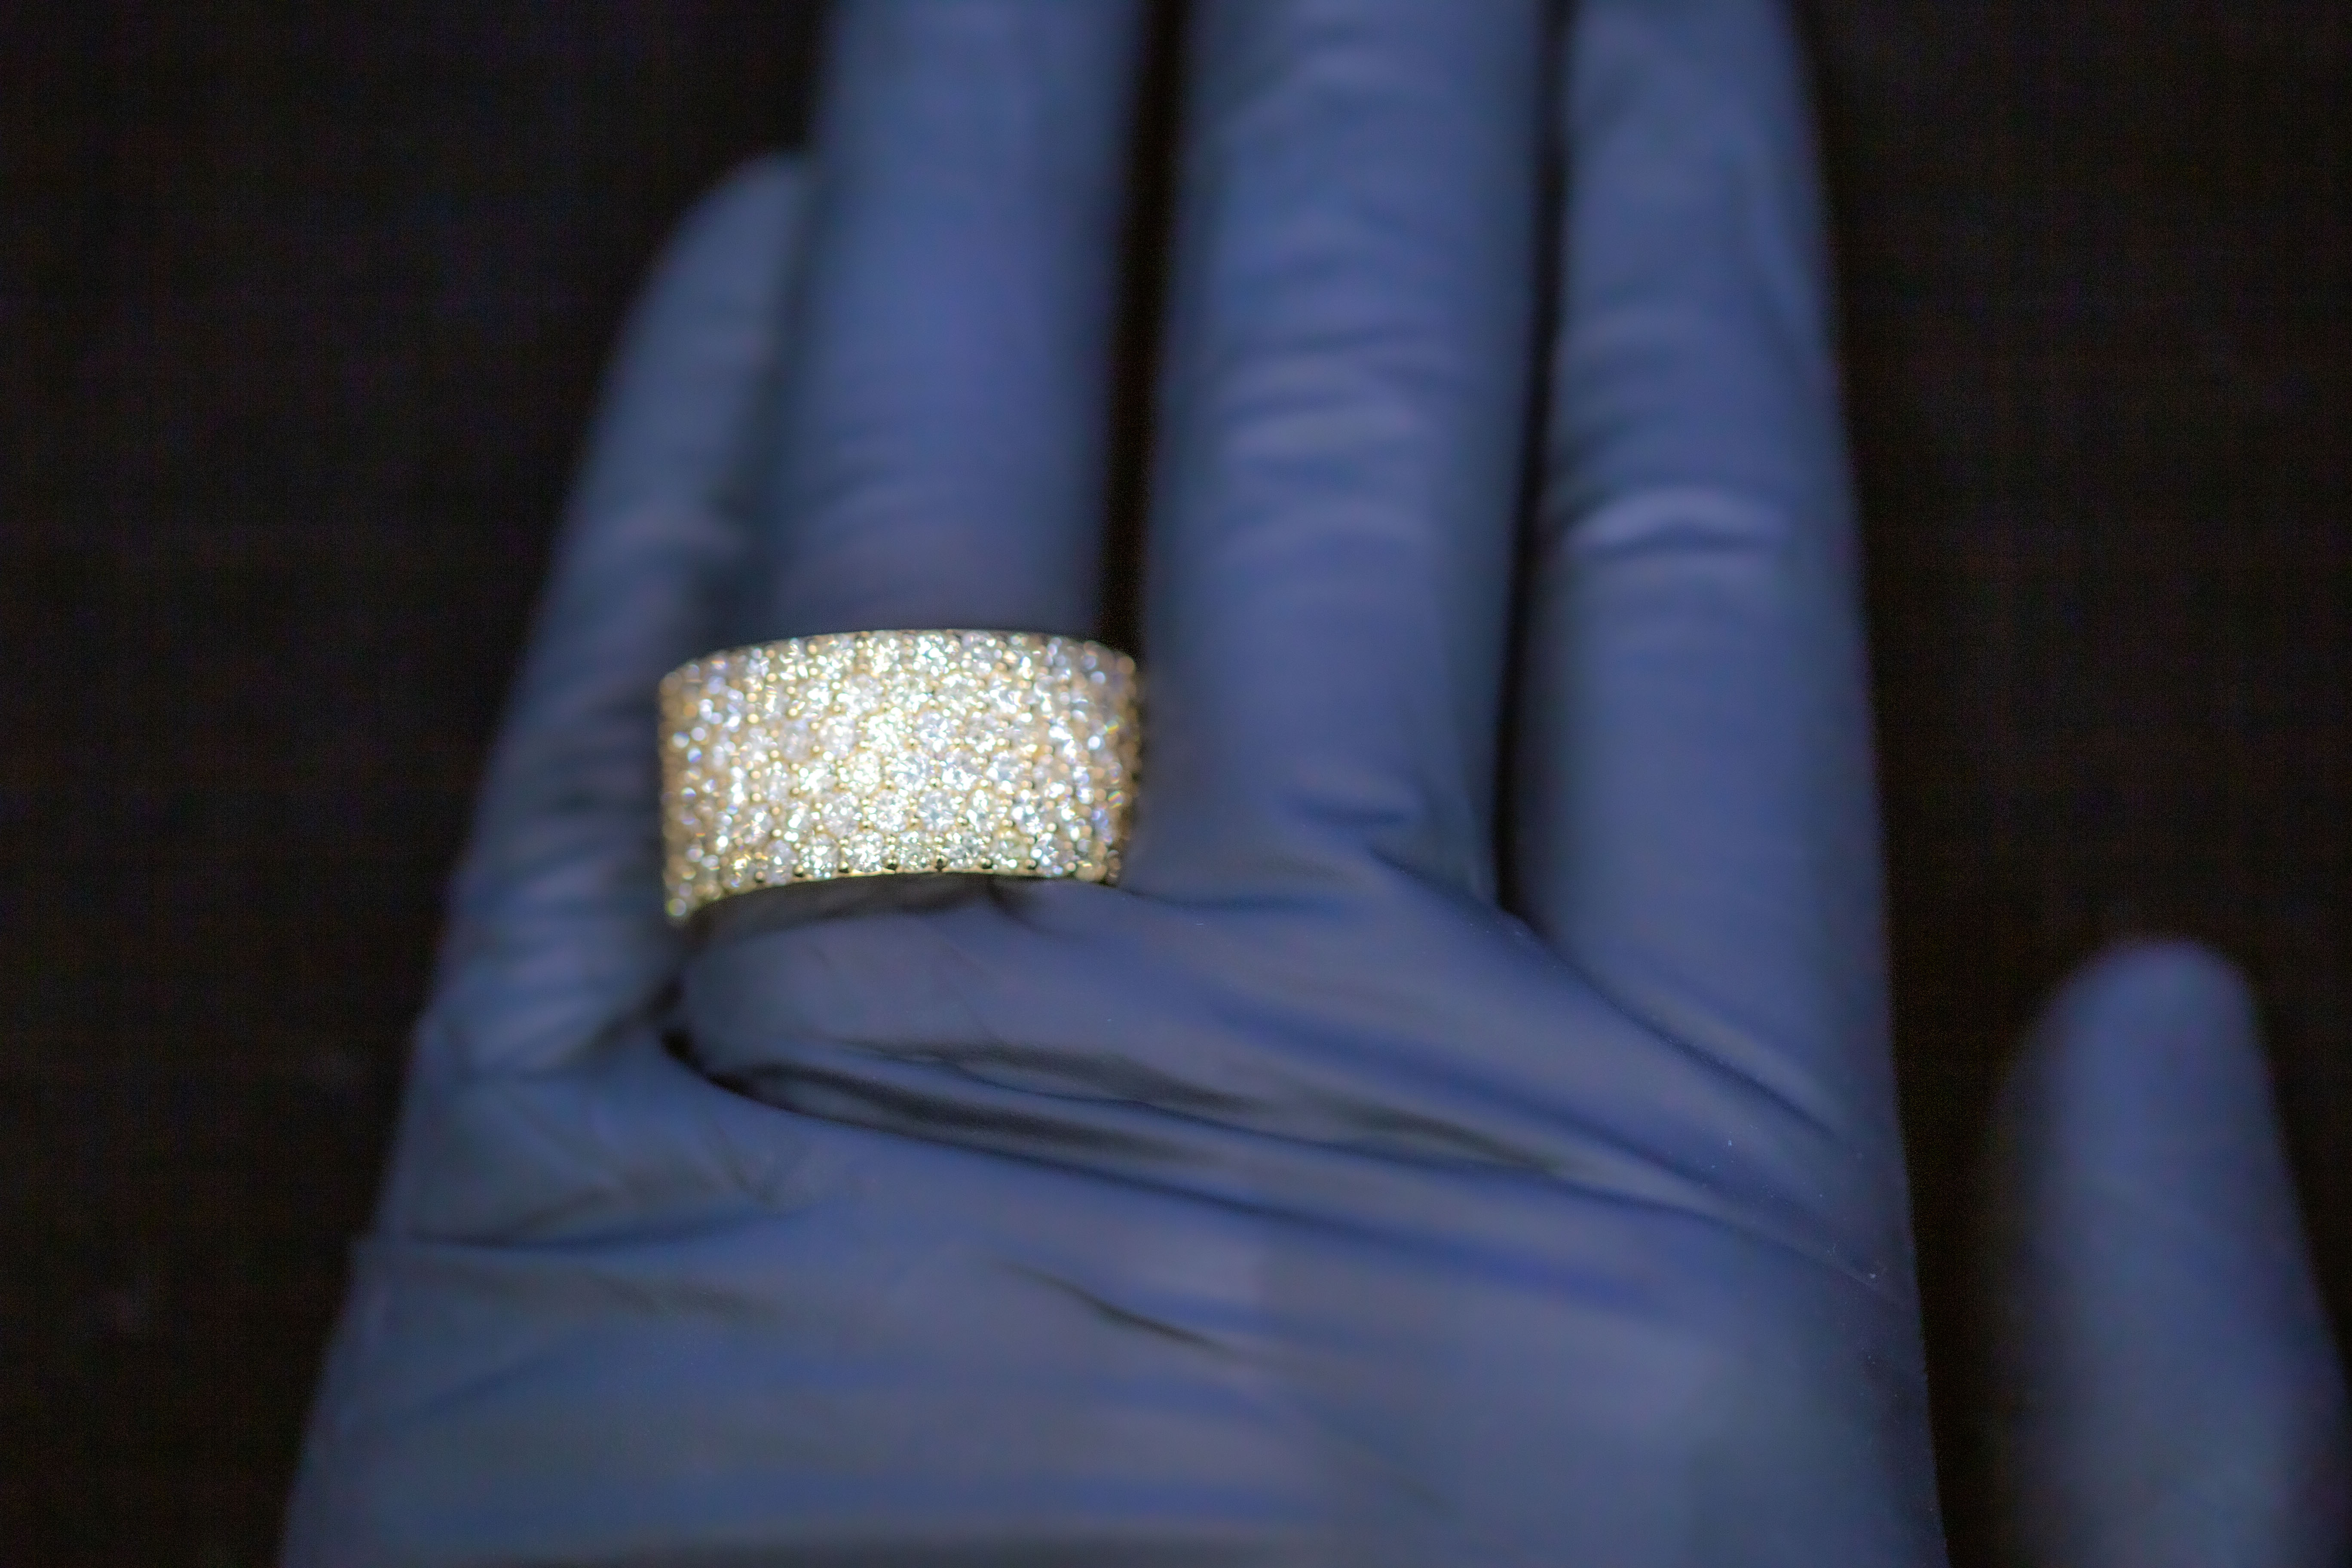 5.50 CT. Diamond Ring in 14K Gold - White Carat Diamonds 